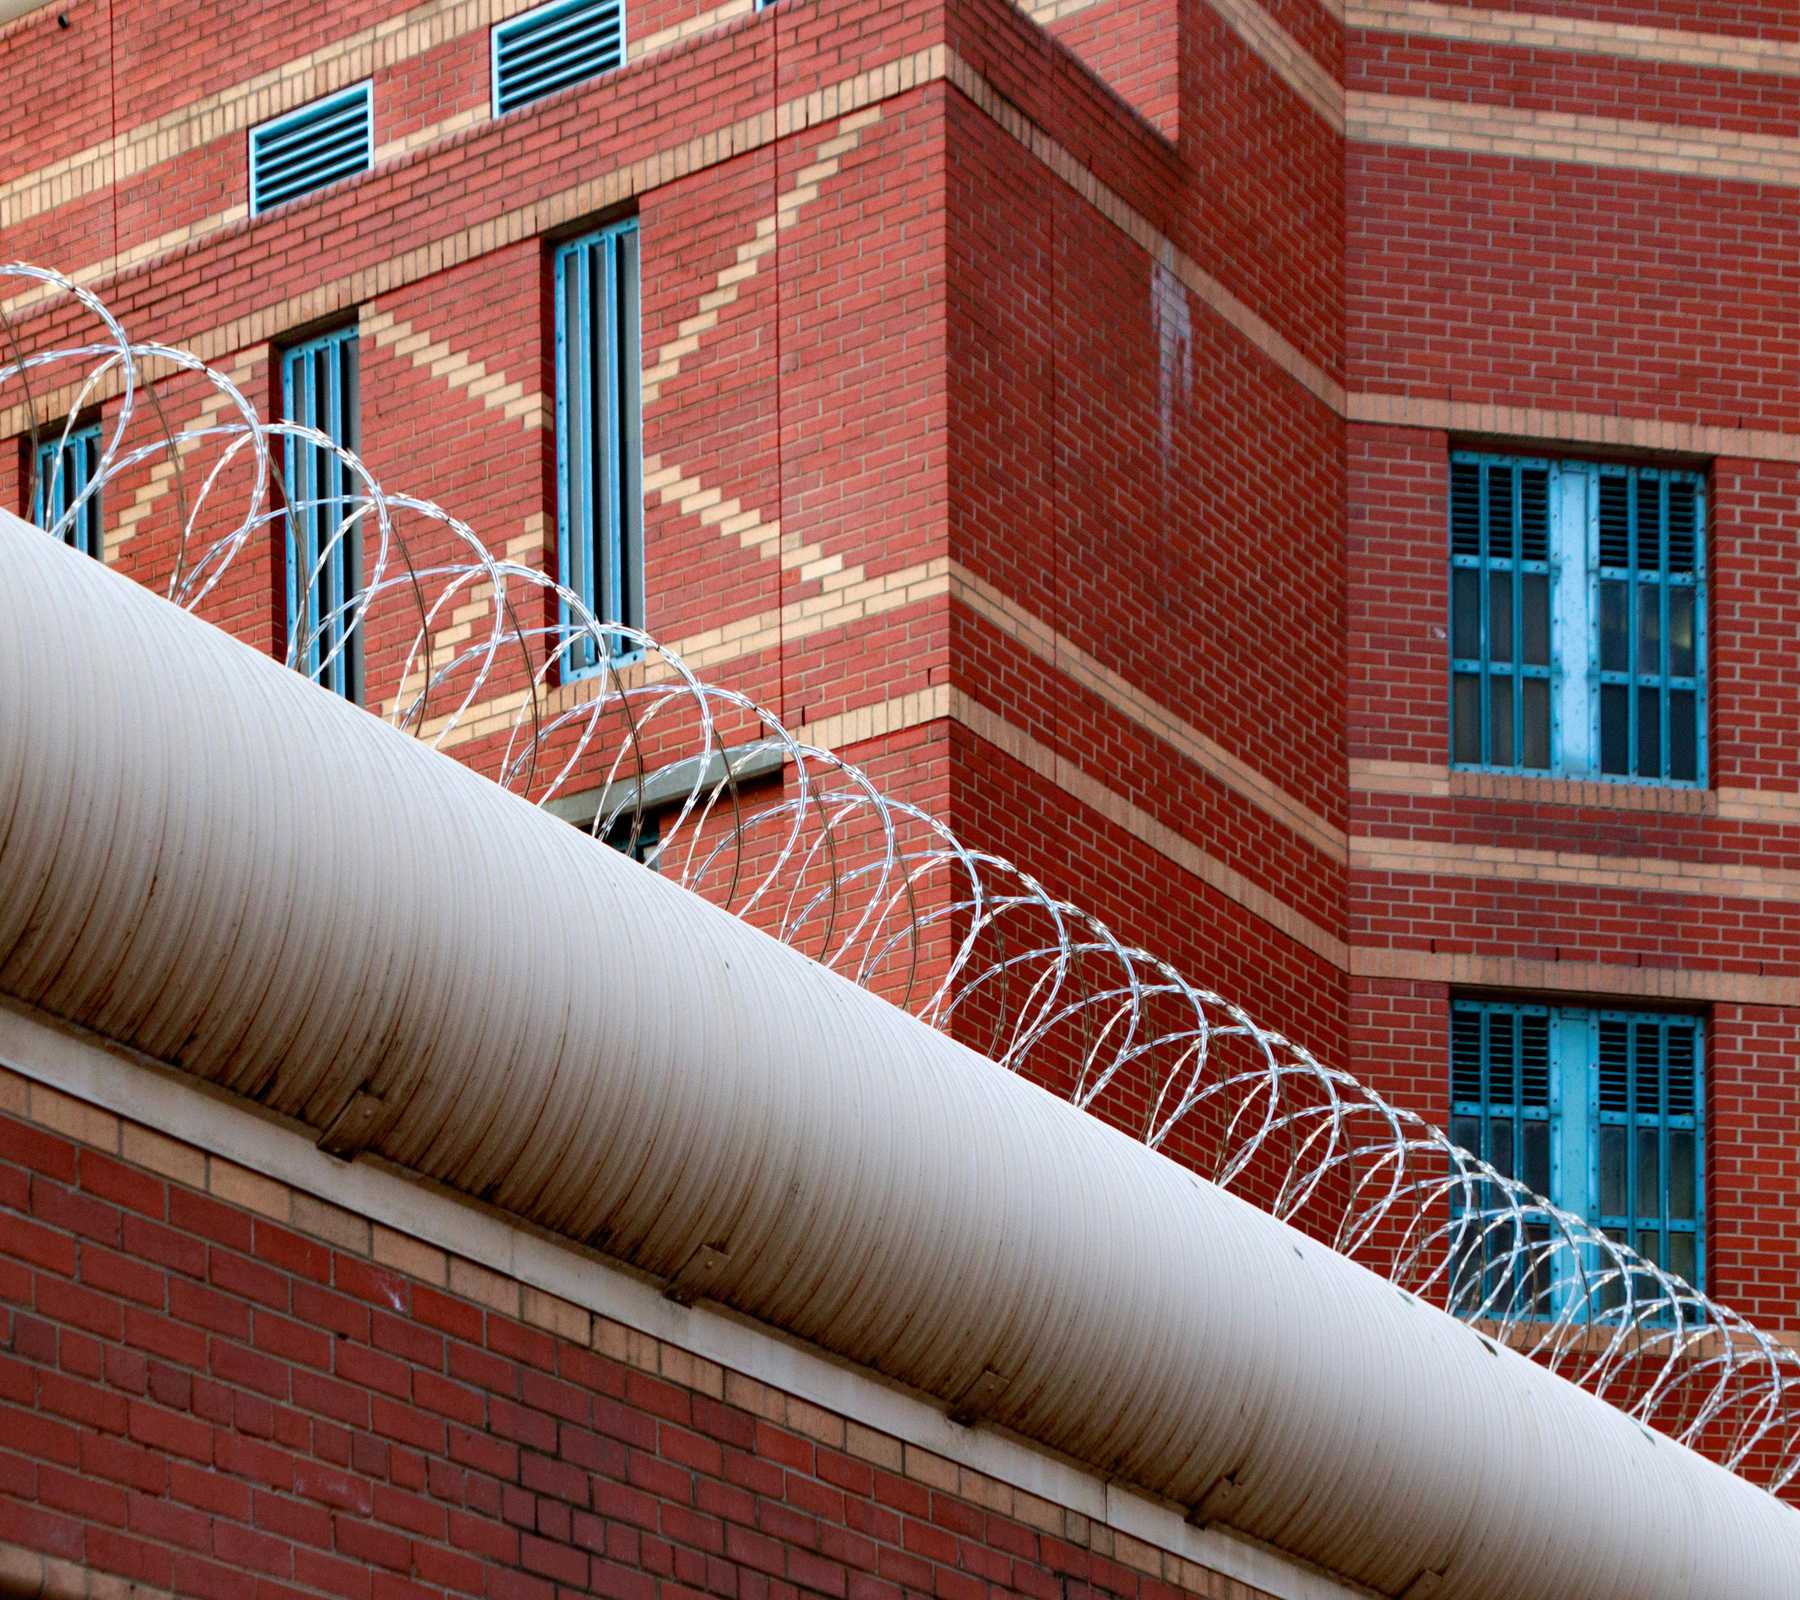 Exterior of Melbourne Assessment Prison